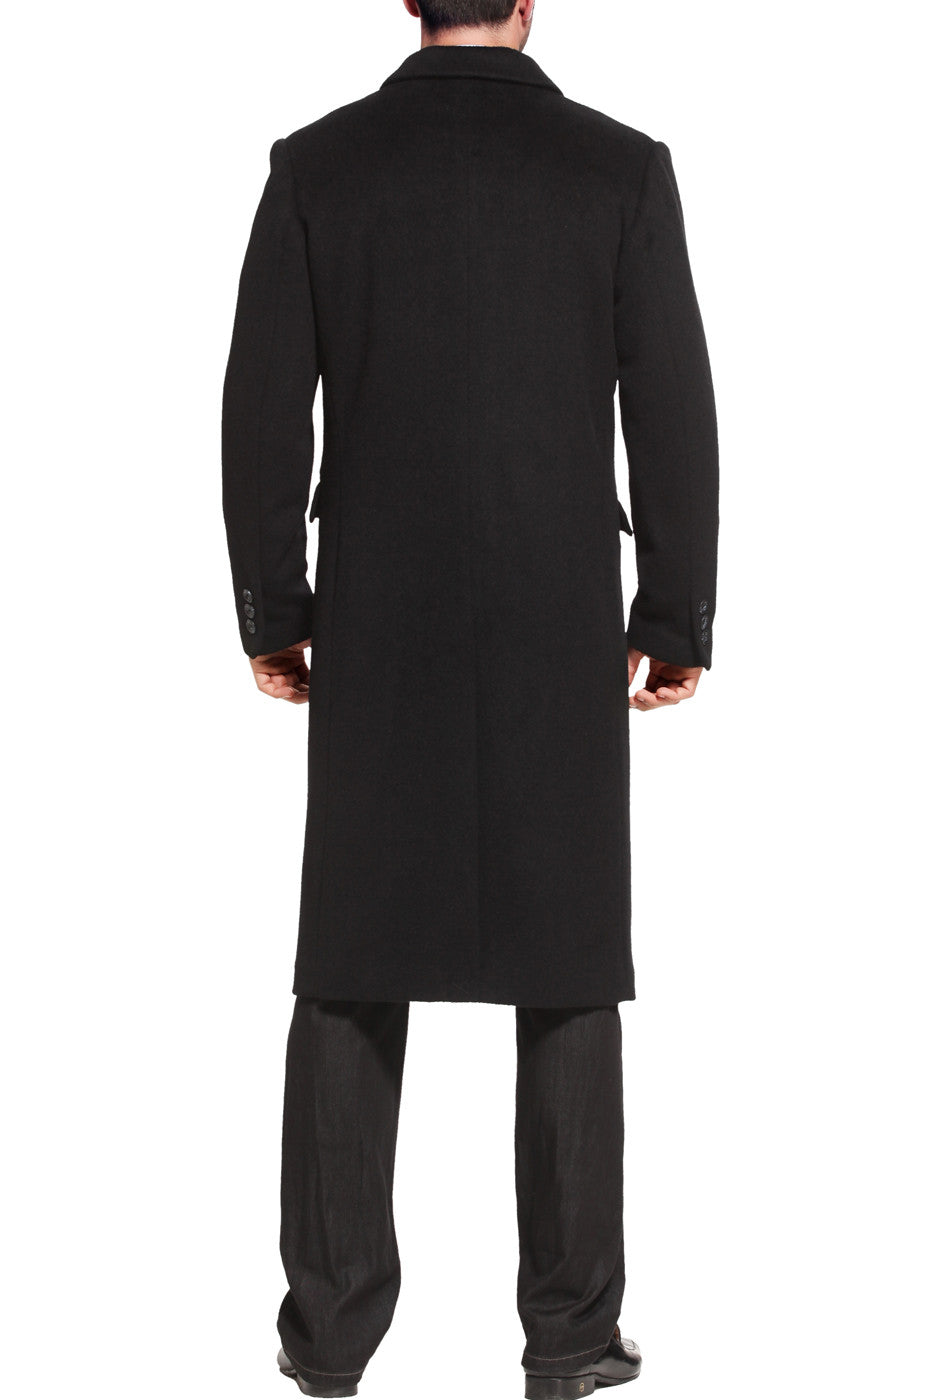 BGSD Men Josh Cashmere & Wool Blend Double Breasted Long Coat